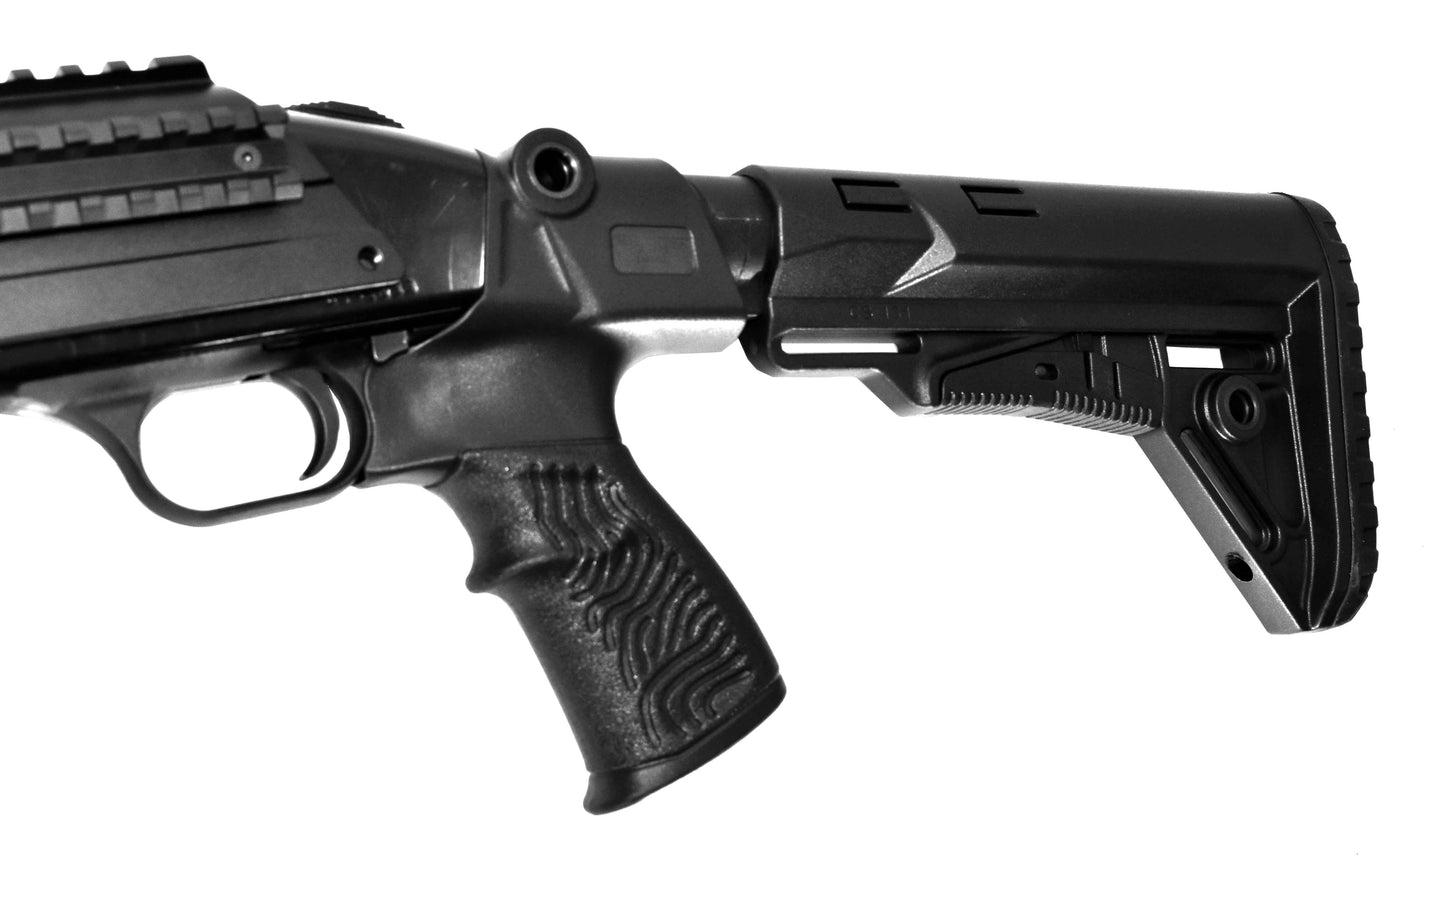 Mossberg 590a1 12 gauge shotgun stock black.